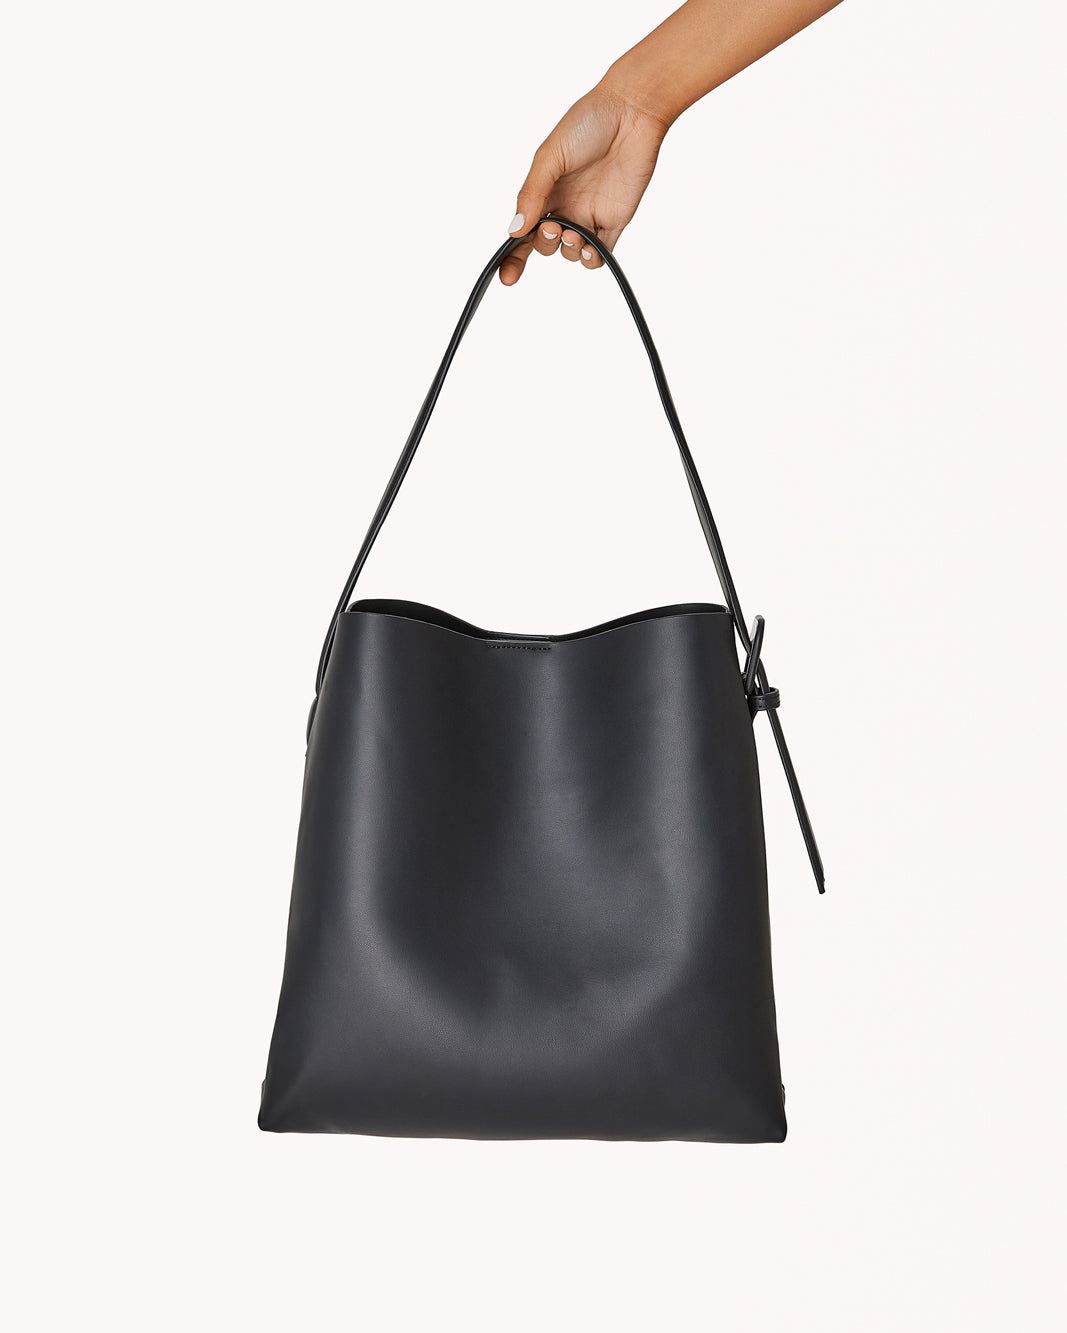 TARA TOTE BAG - BLACK-Handbags-Billini-O/S-Billini